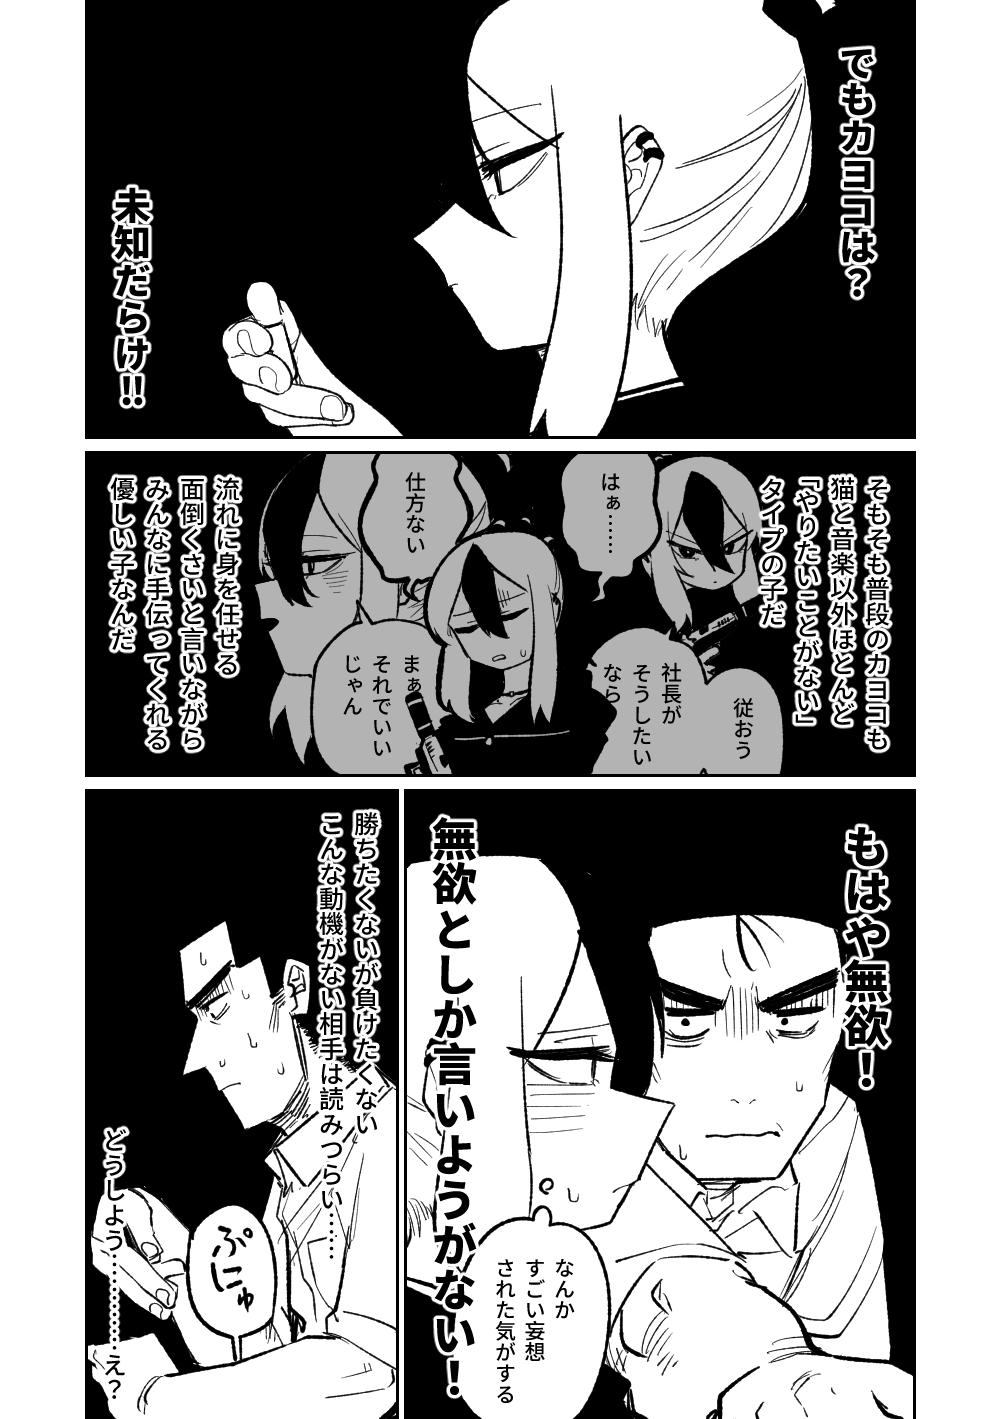 [Asahina Yoshitosi] Benriya 68 Datsui Mahjong 01-05 | 便利屋６８脫衣麻將 01-05 (Blue Archive) [Chinese, Japanese] [Ongoing] 179